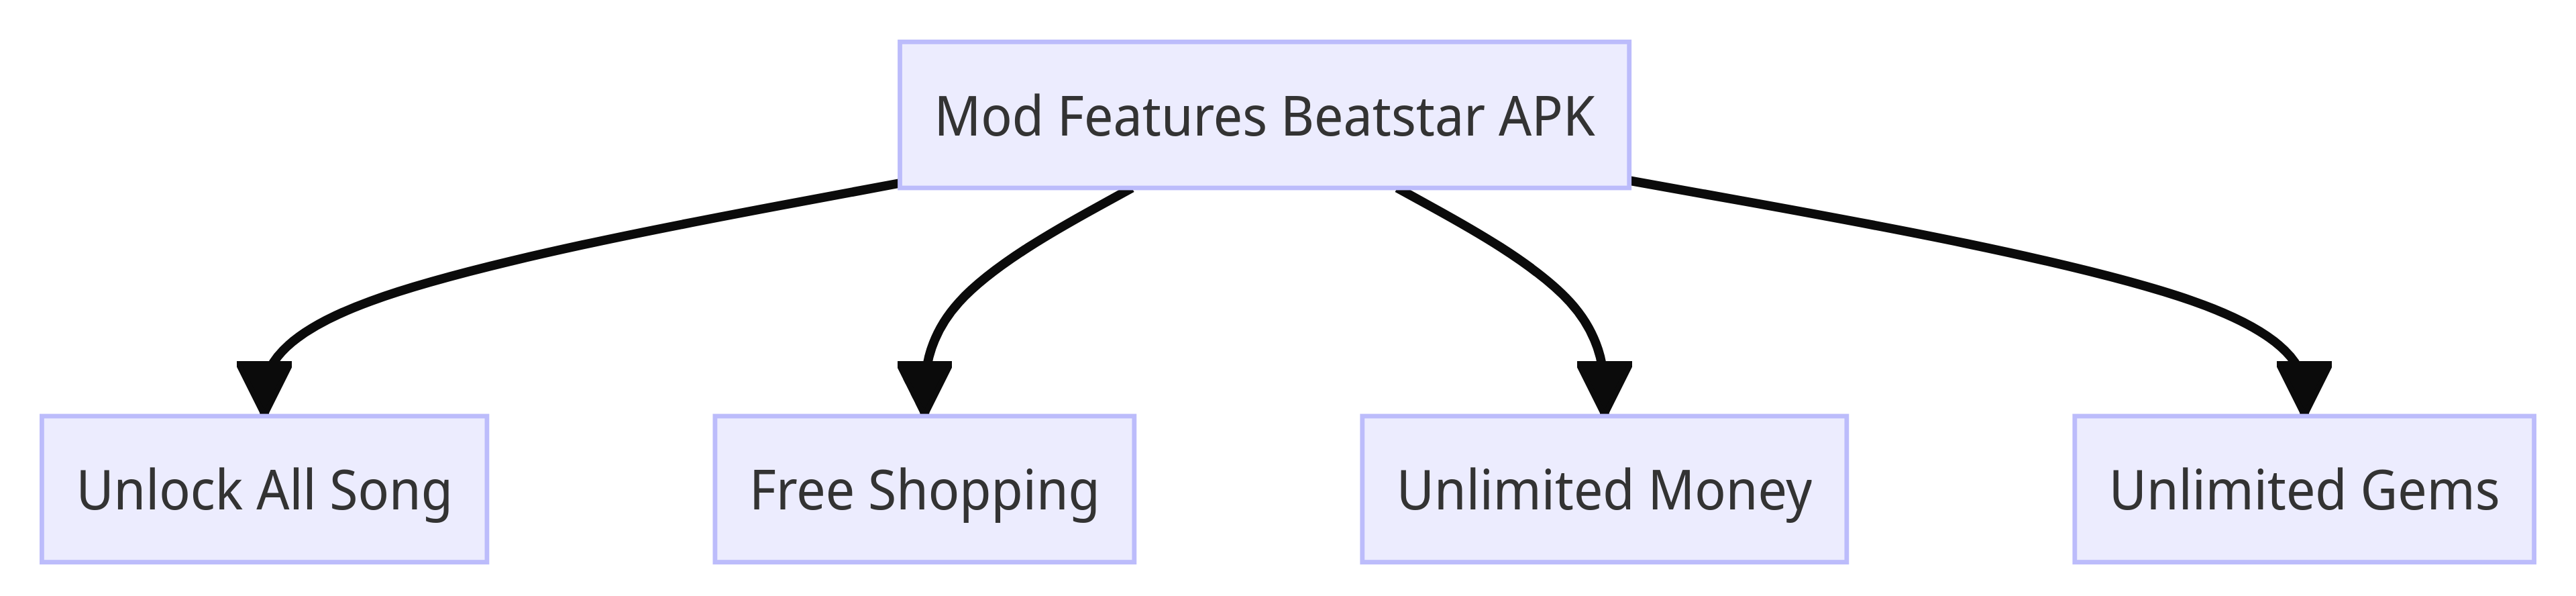 Mod Features Beatstar APK